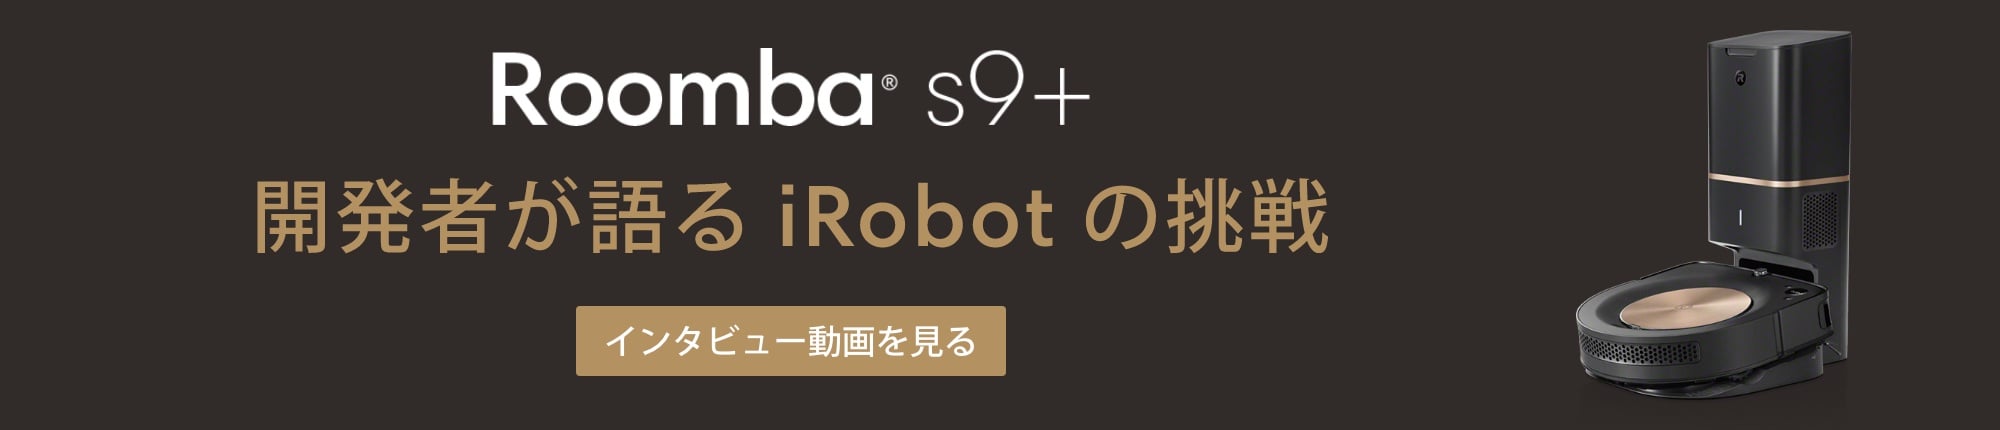 Roomba s9+ 開発者が語るiRobotの挑戦 インタビュー動画を見る